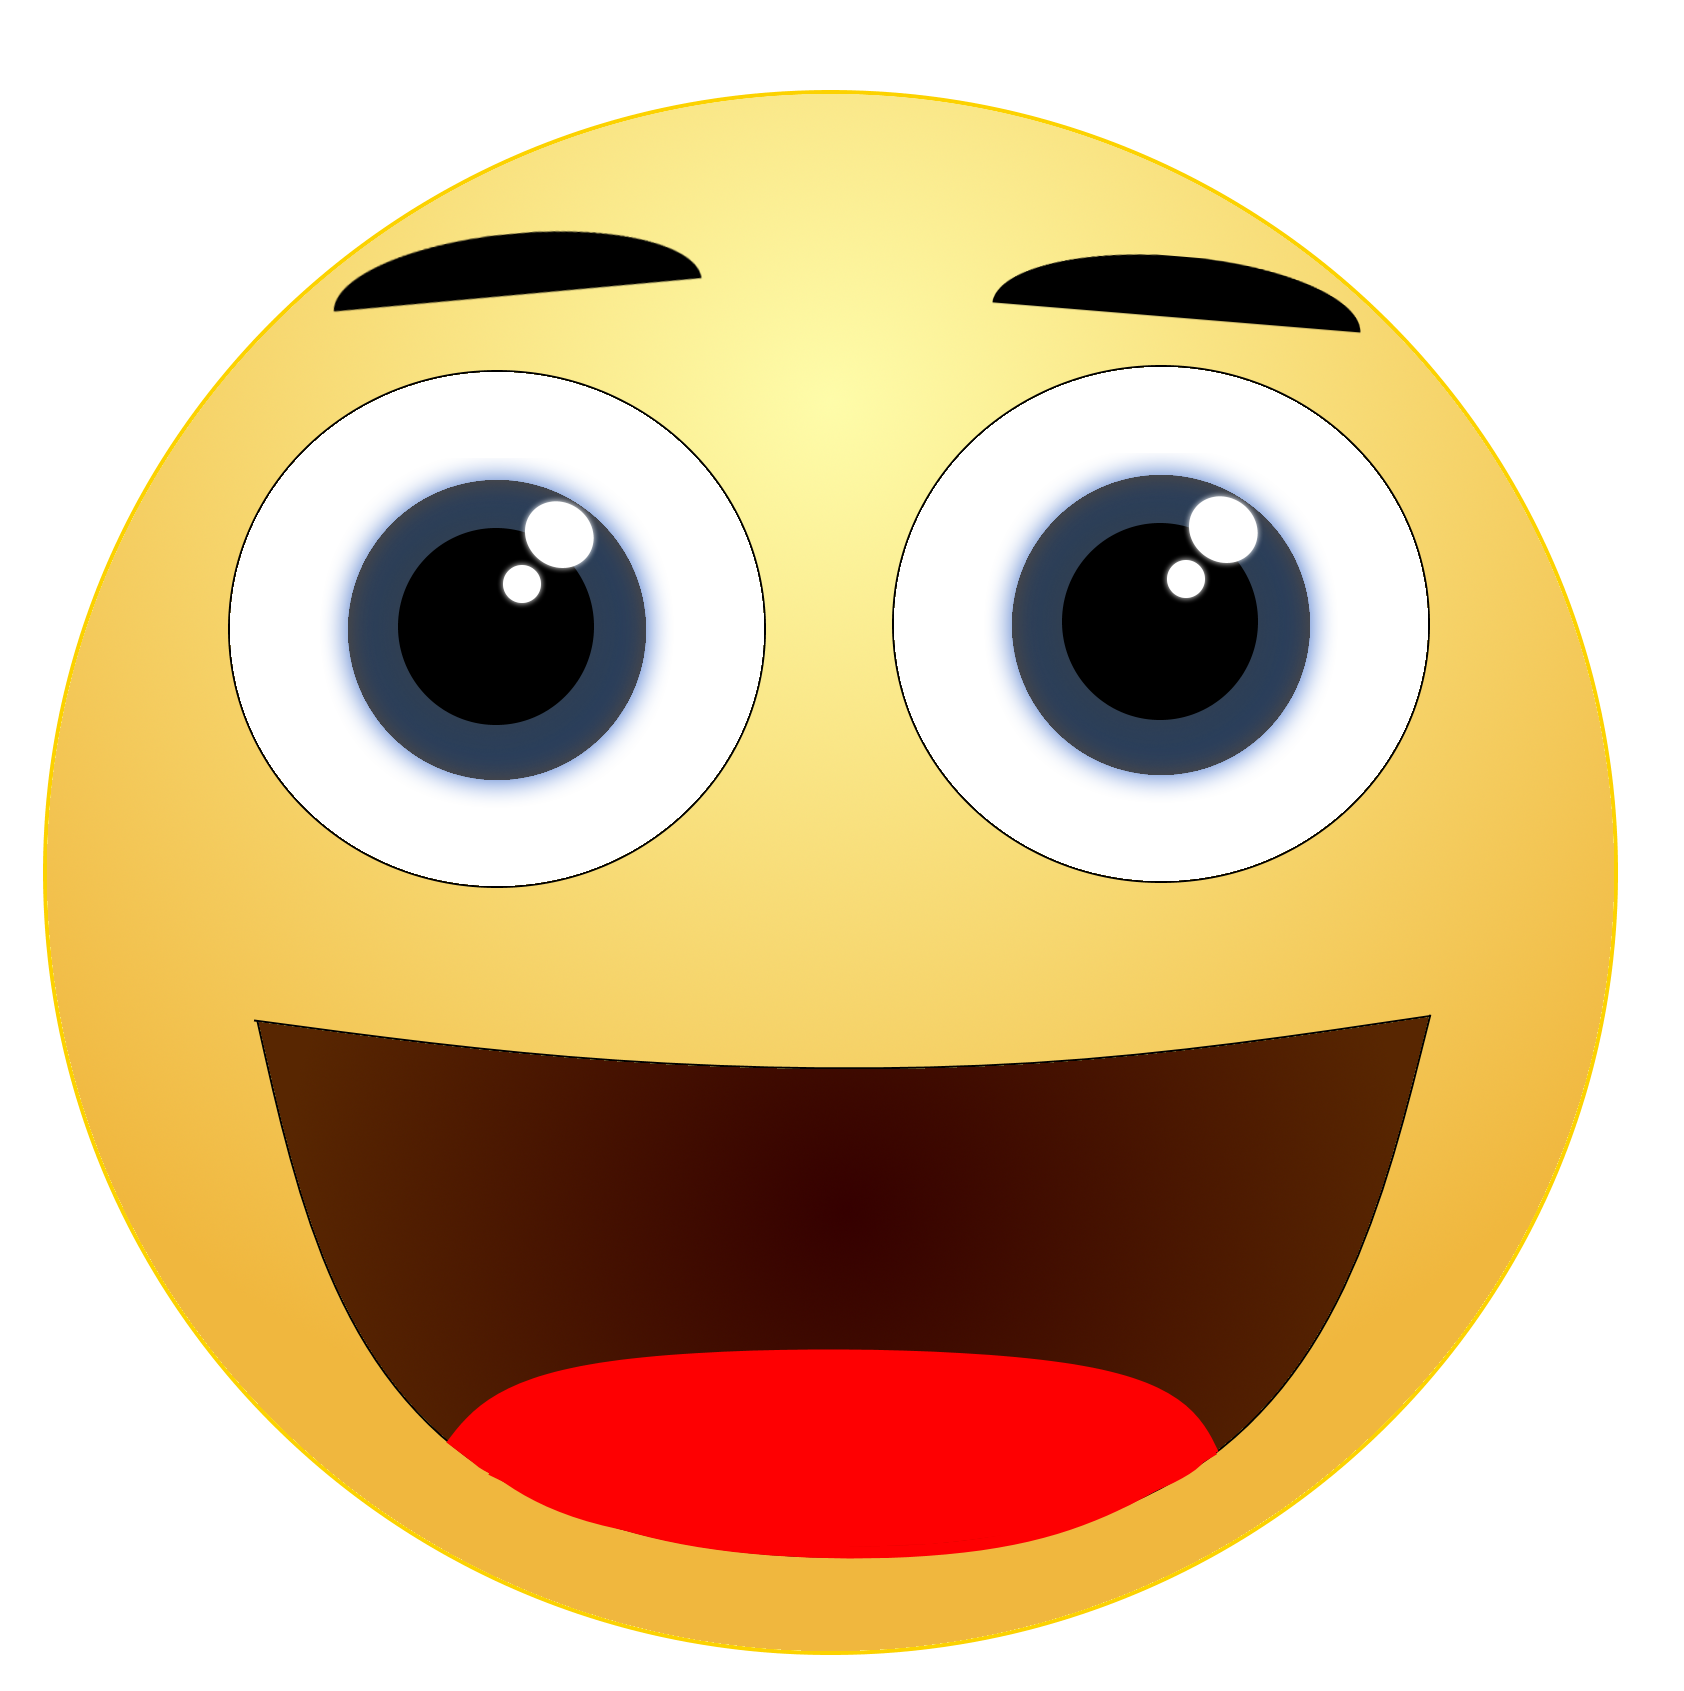 Bewildered Emoji PNG Image High Quality PNG Image